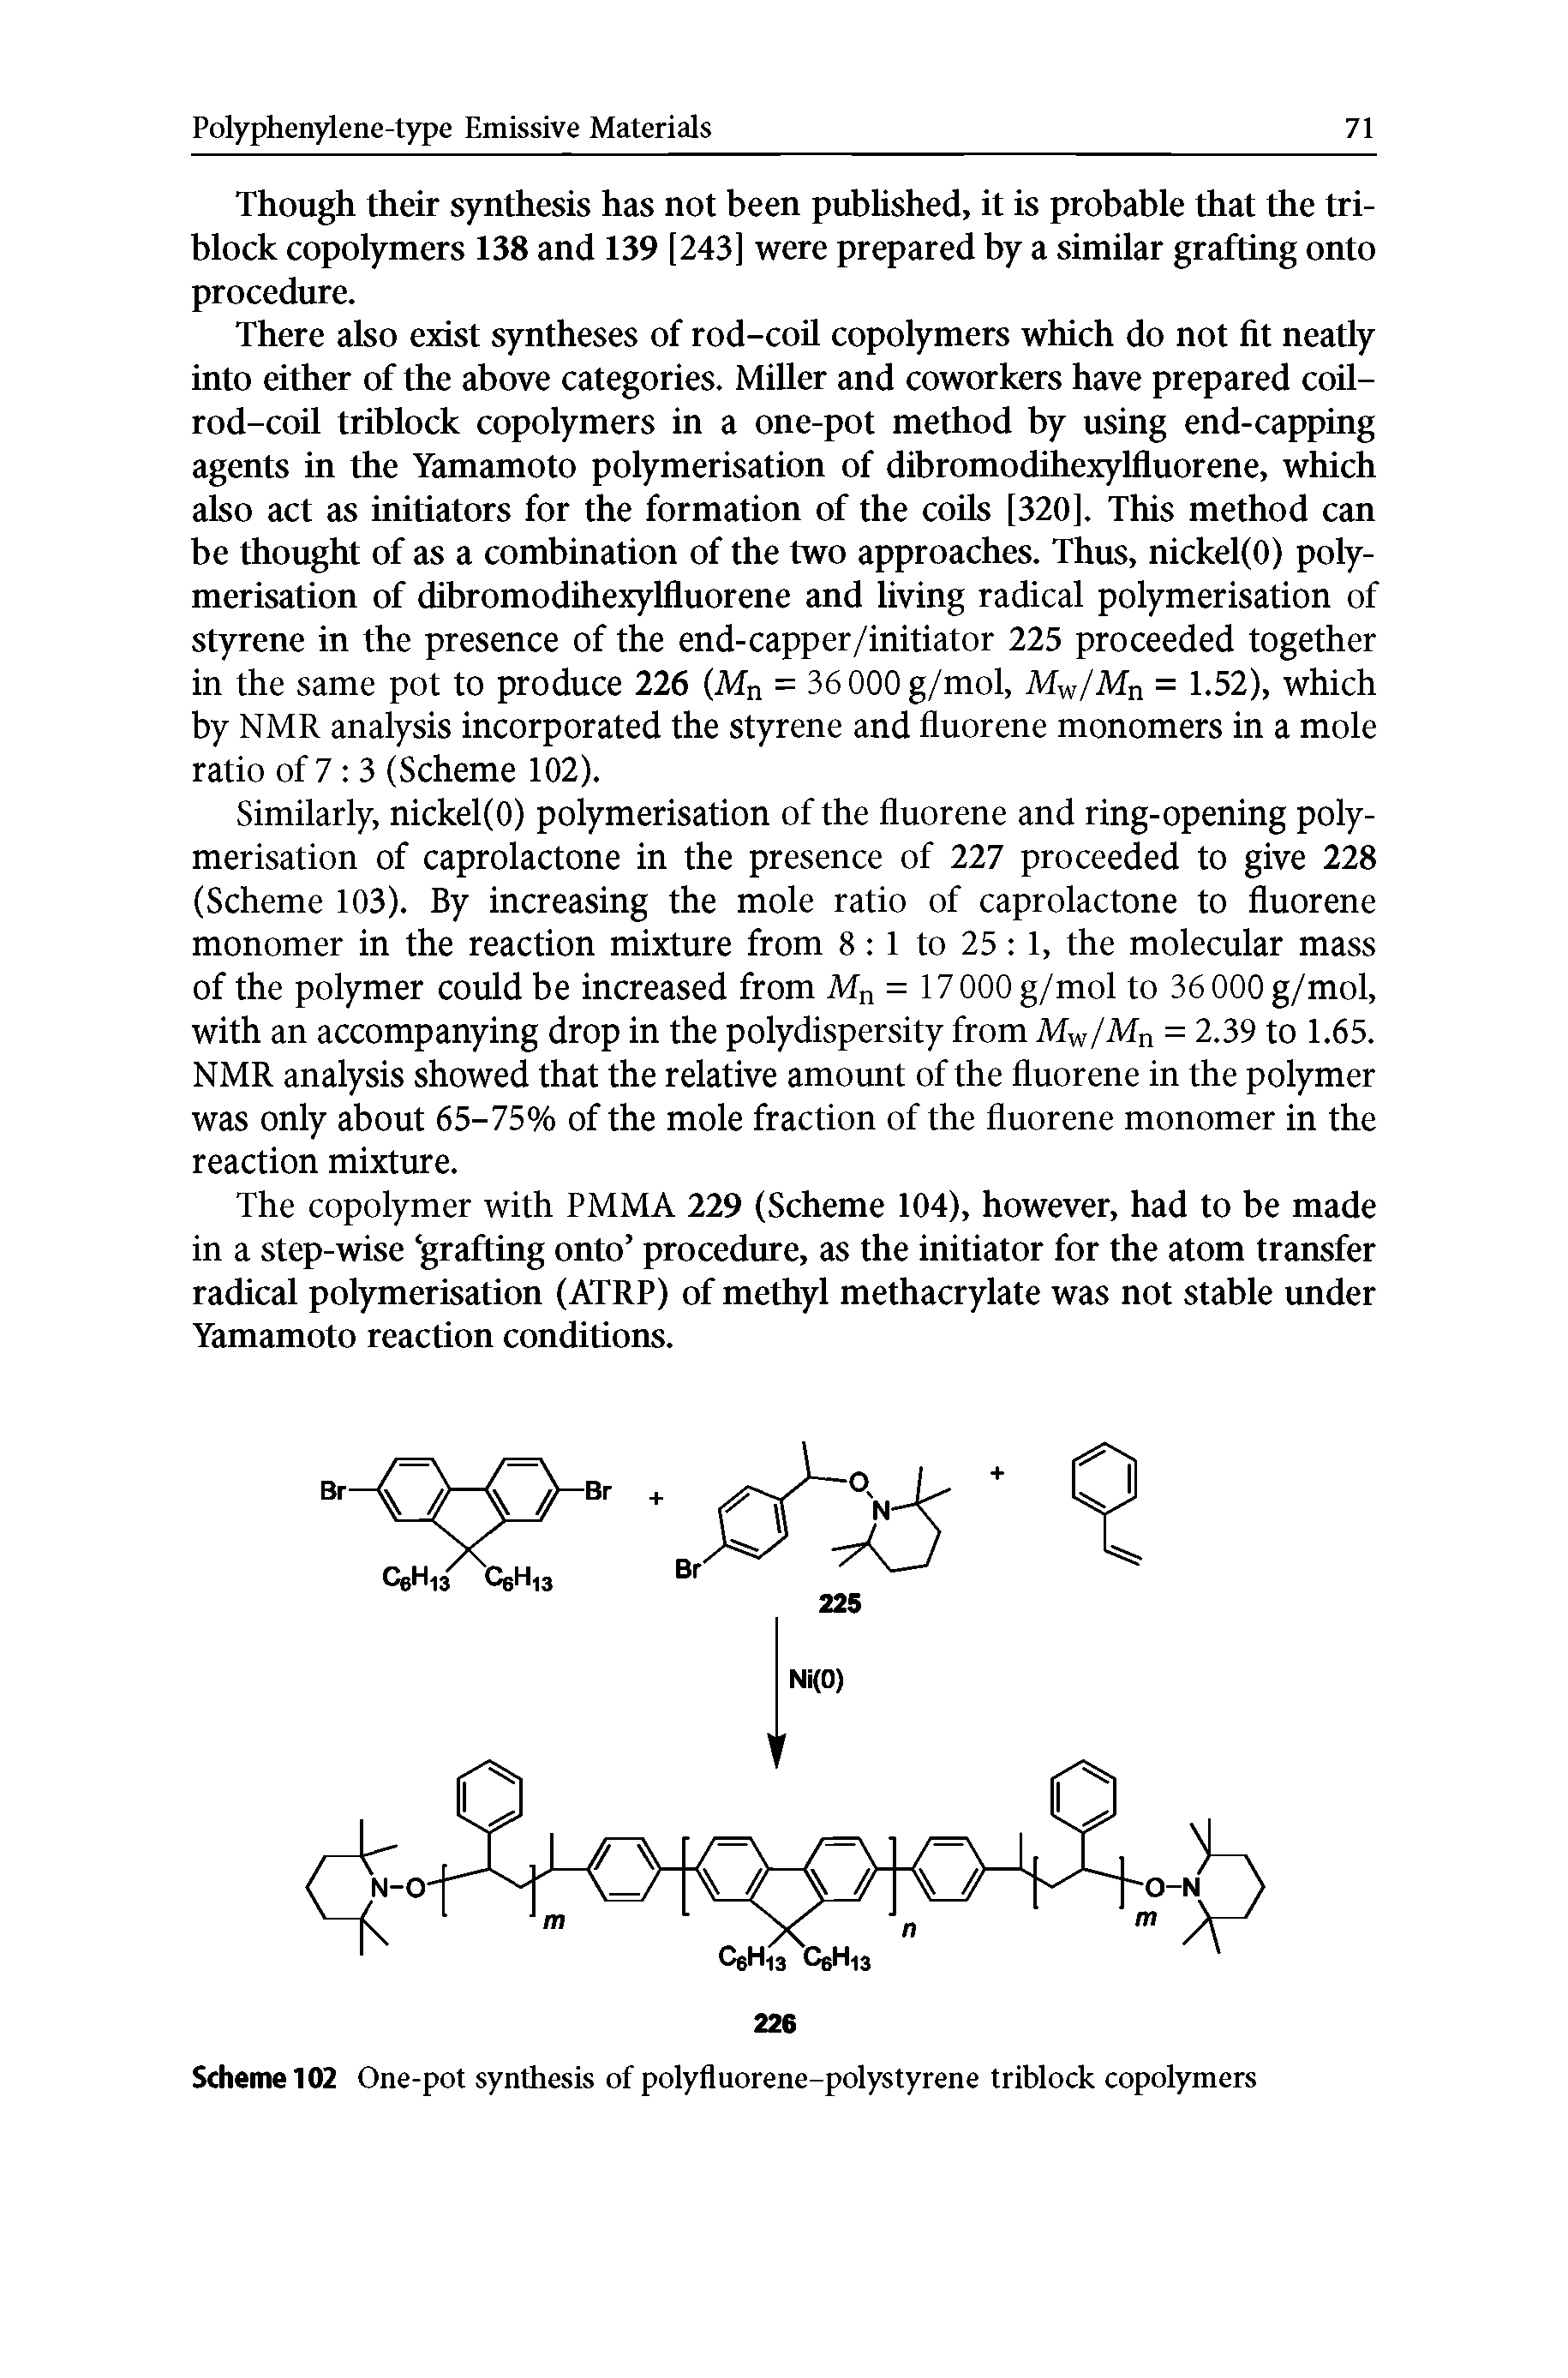 Scheme 102 One-pot synthesis of polyfluorene-polystyrene triblock copolymers...